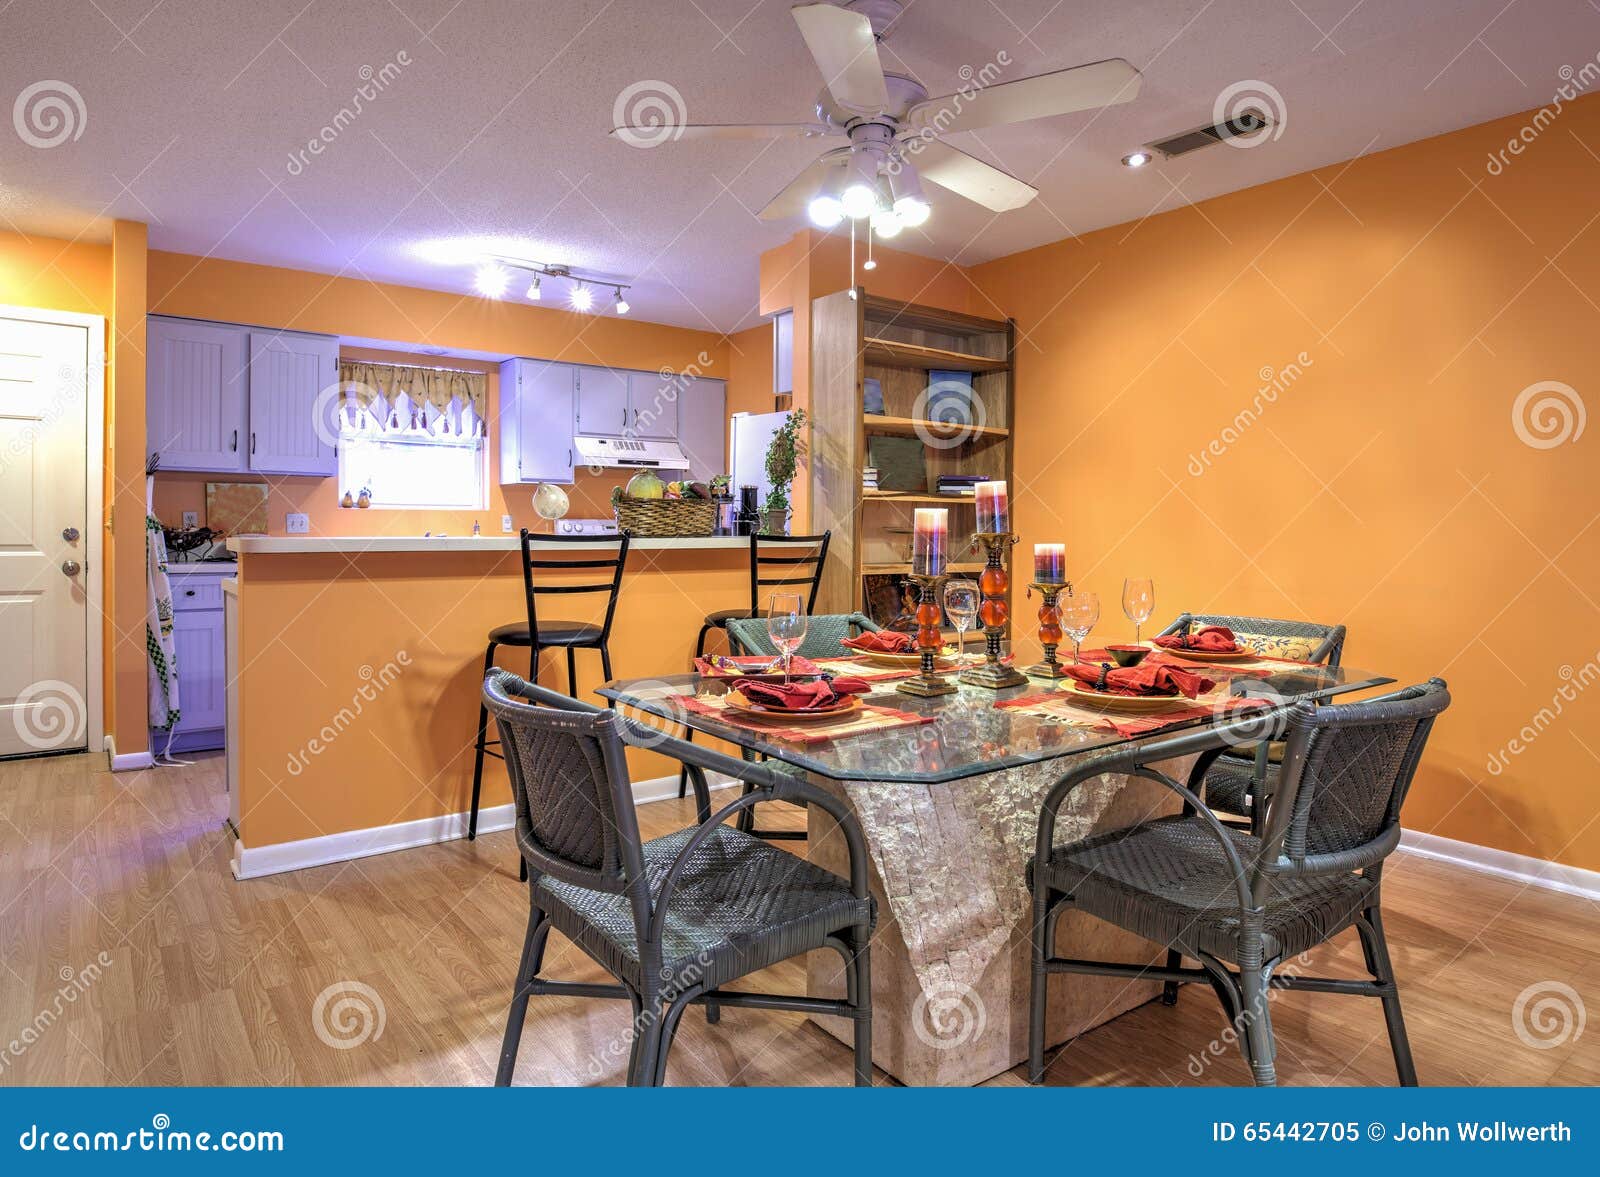 Open Concept Apartment Diningroom Kitchen Orange Walls 65442705 